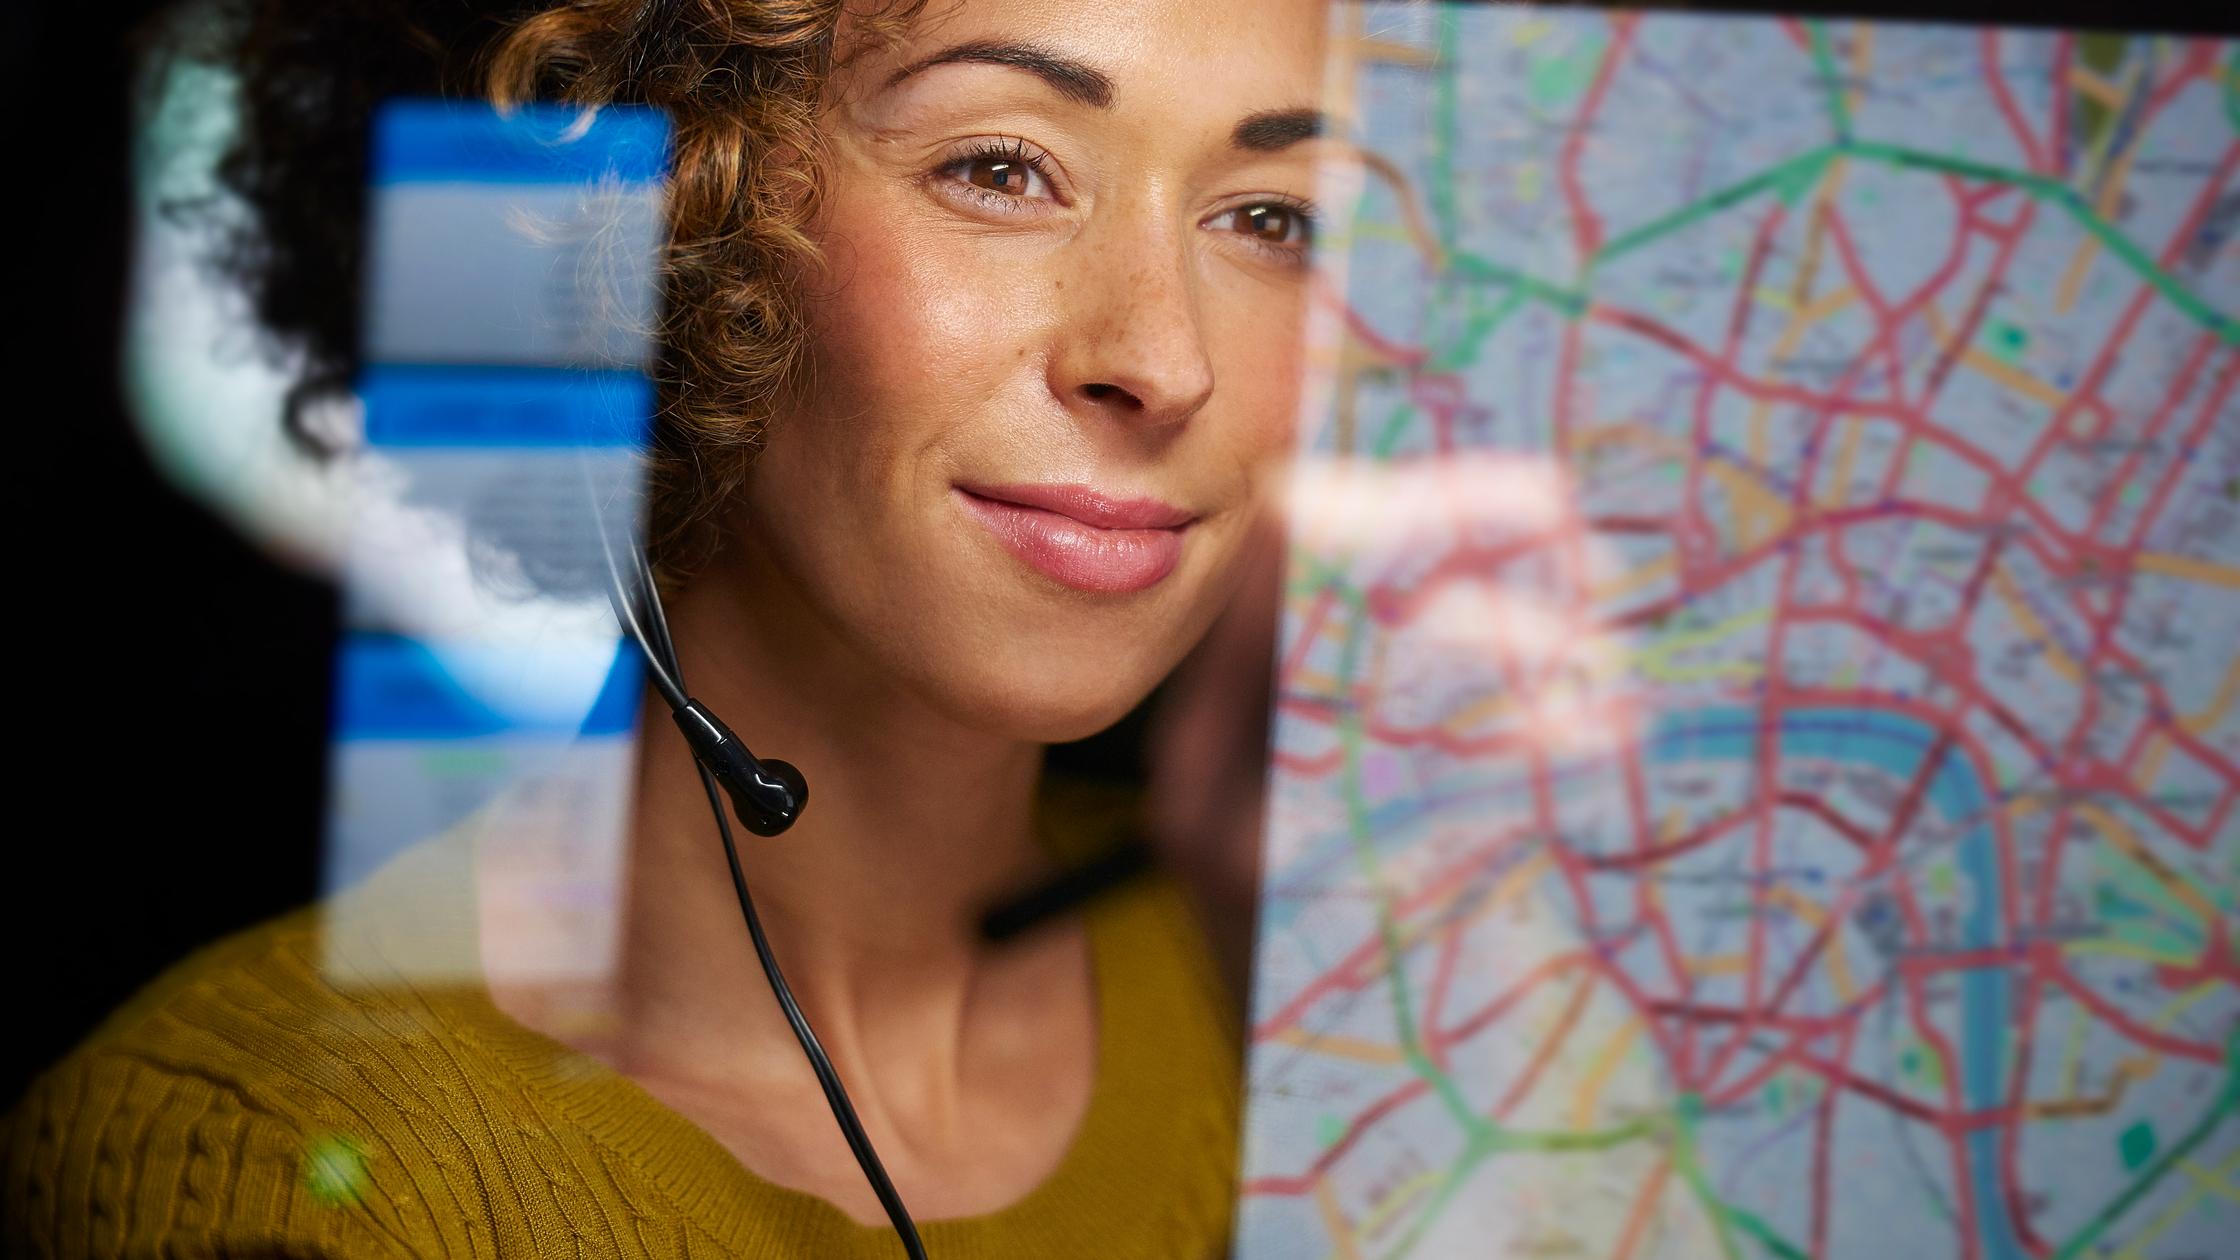 Digital trust - woman watching map on screen